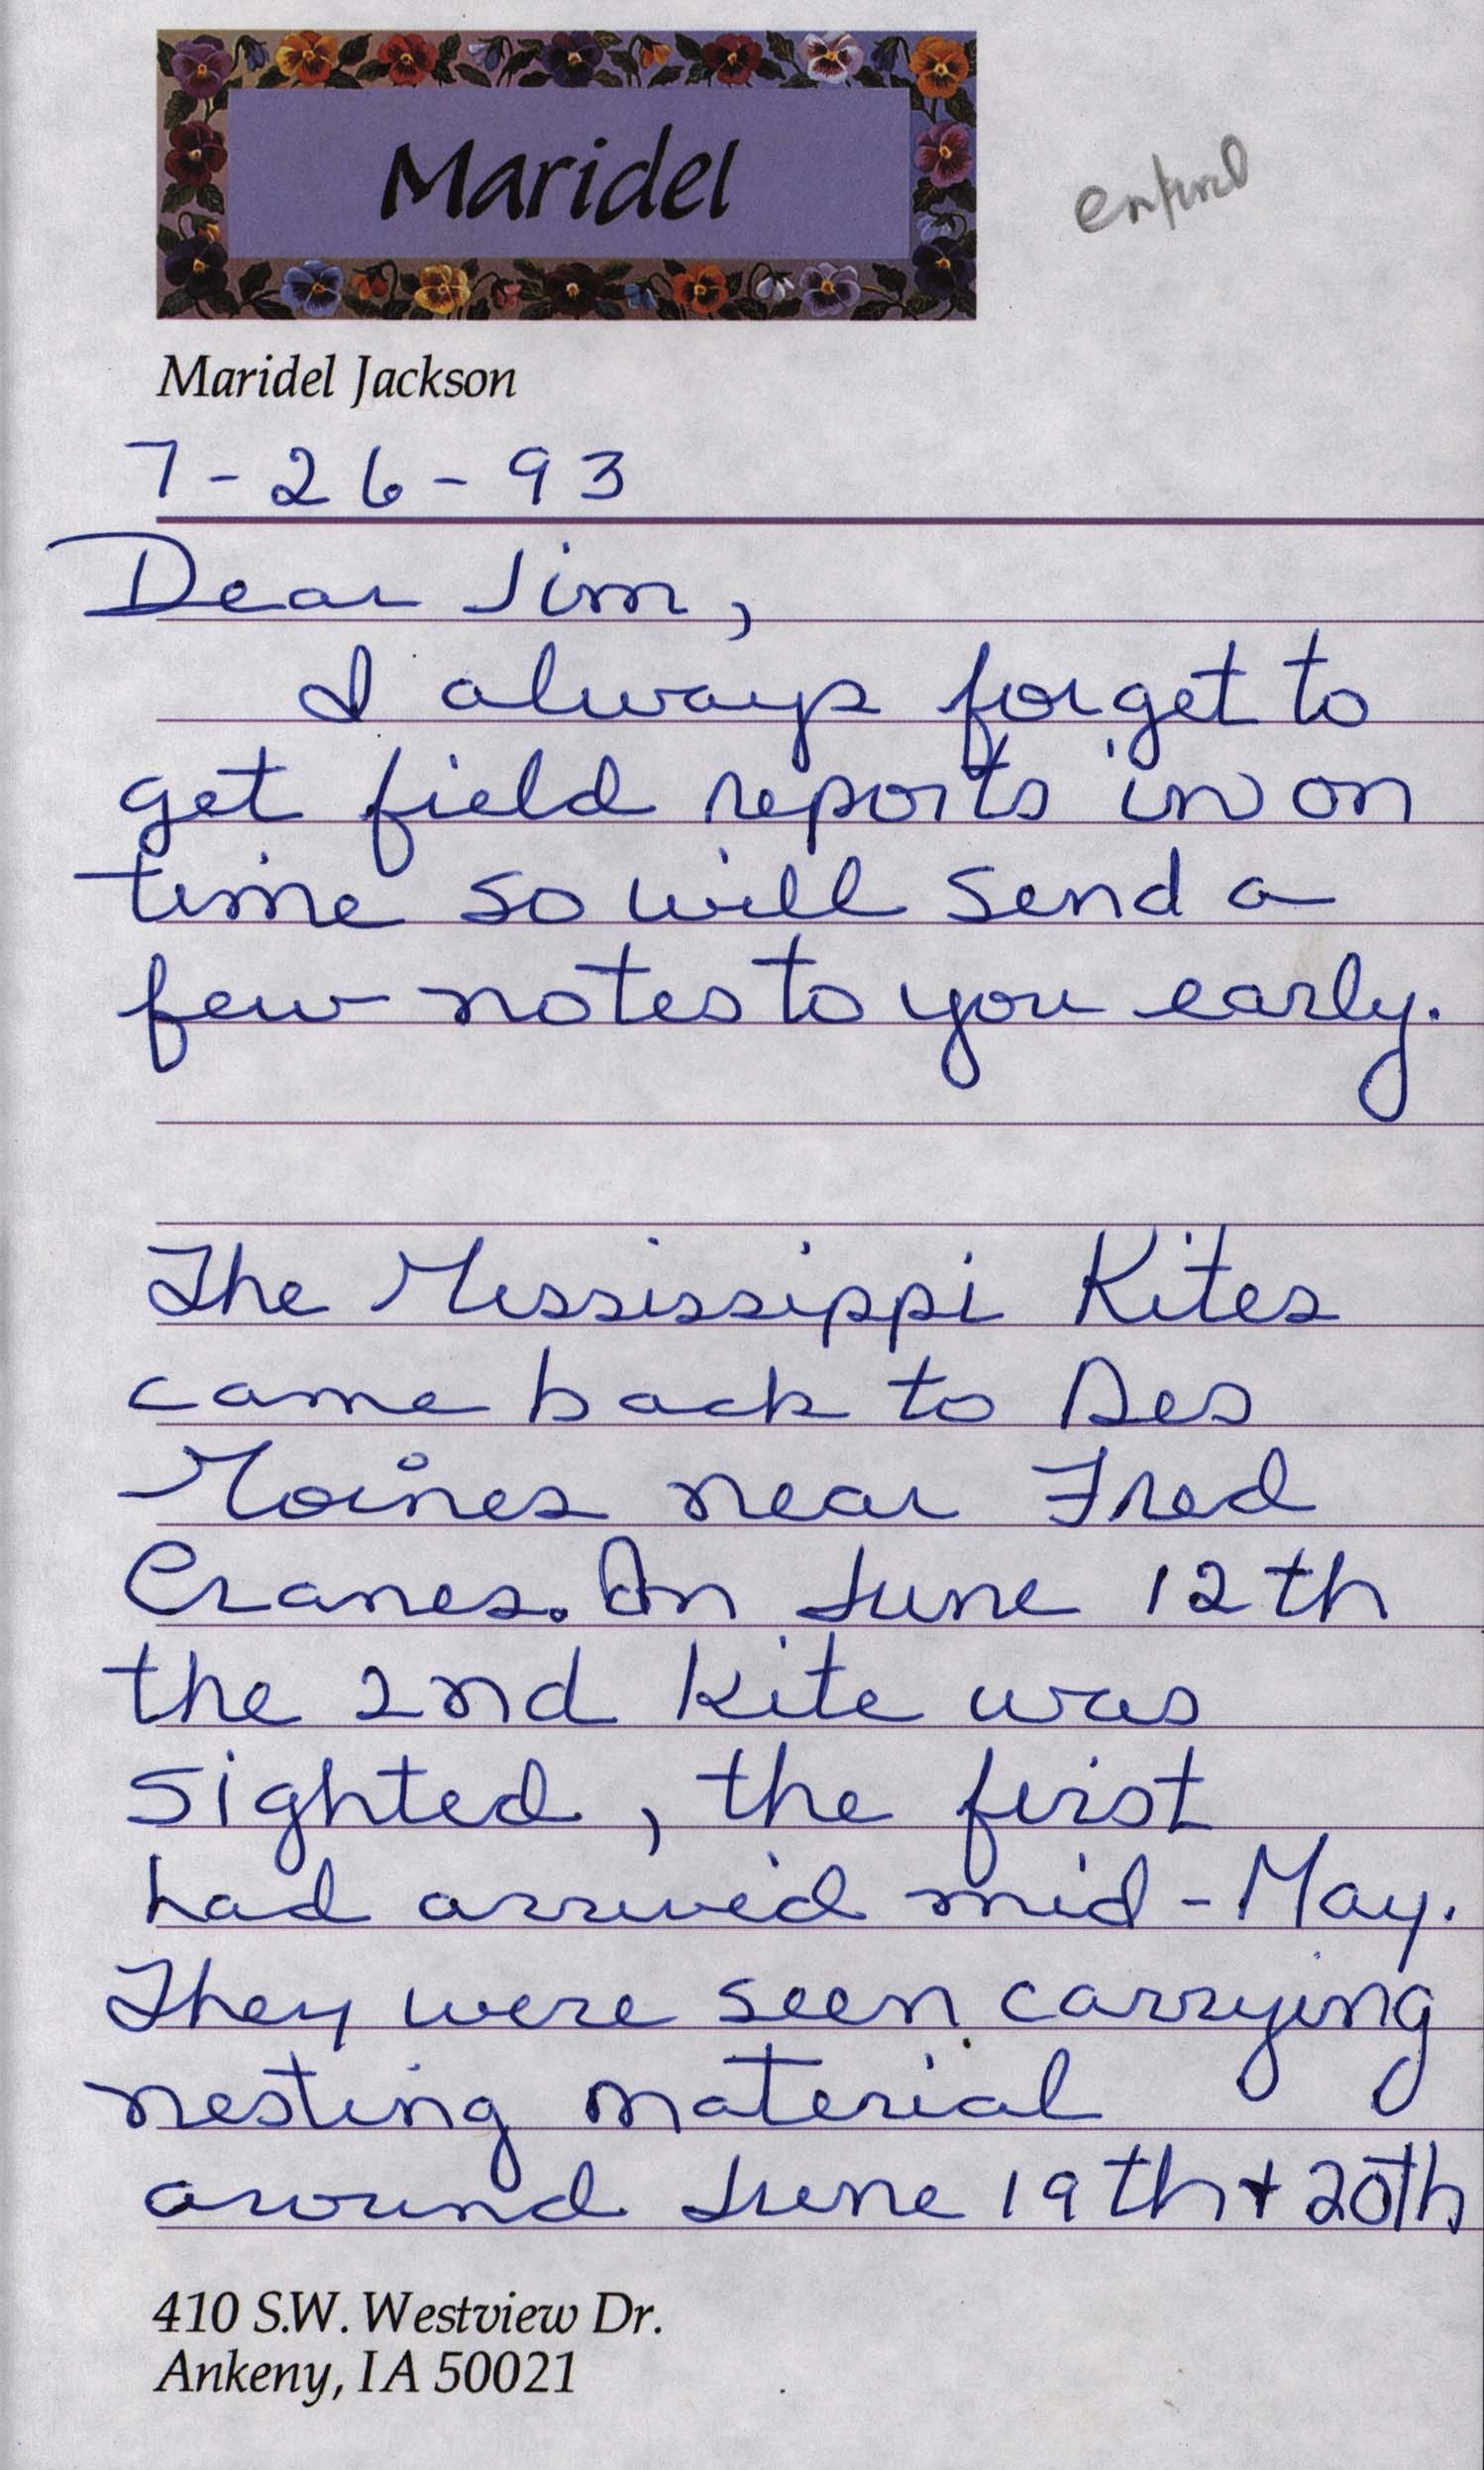 Maridel Jackson letter to James J. Dinsmore regarding summer bird sightings, July 26, 1993